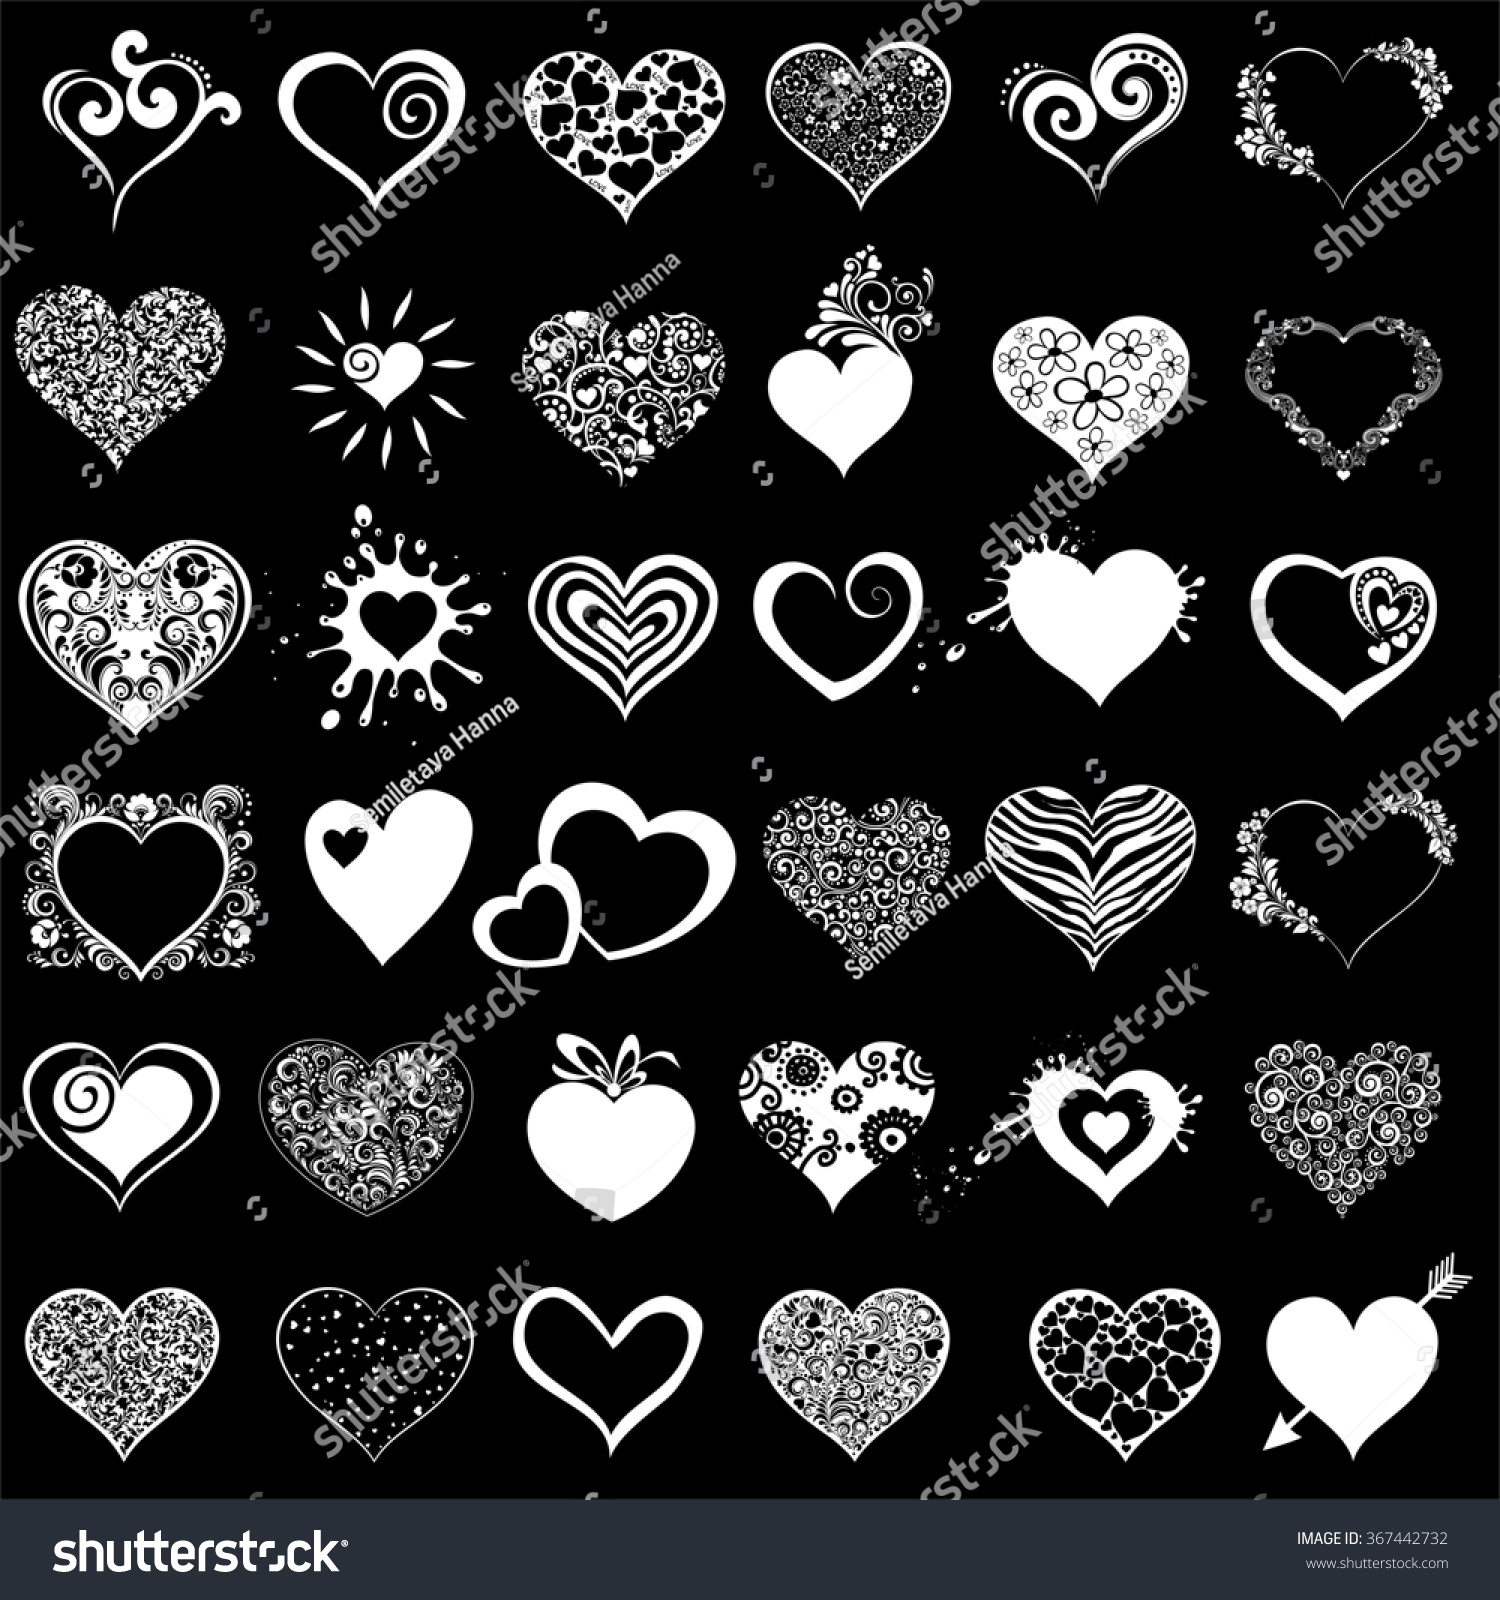 Black And White Hearts Background - WallpaperSafari